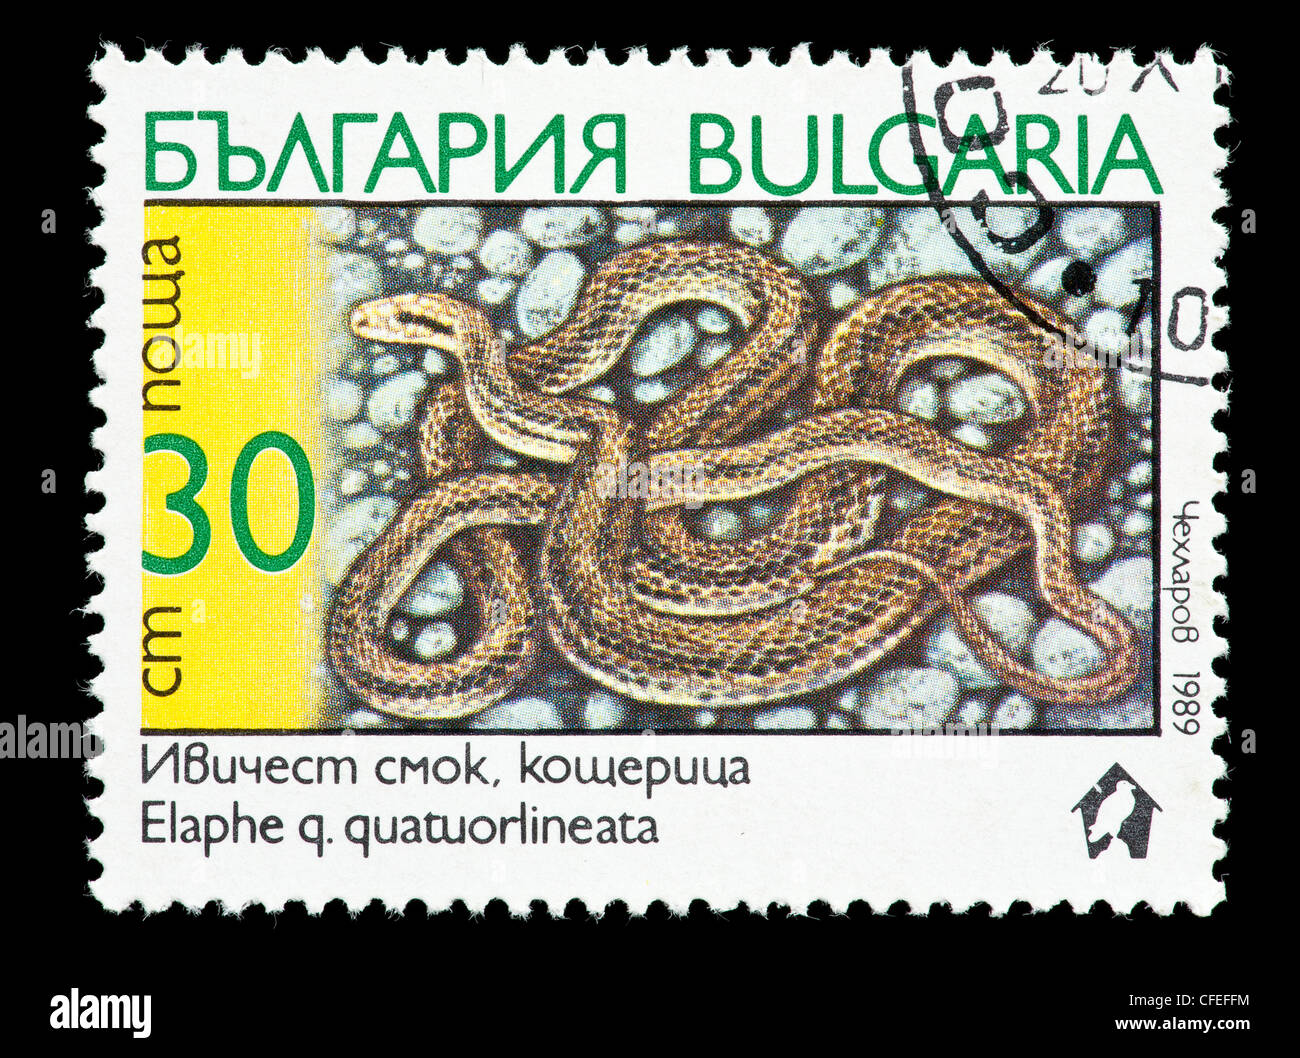 Postage stamp from Bulgaria depicting a snake (Elaphe quatuorlineata) Stock Photo